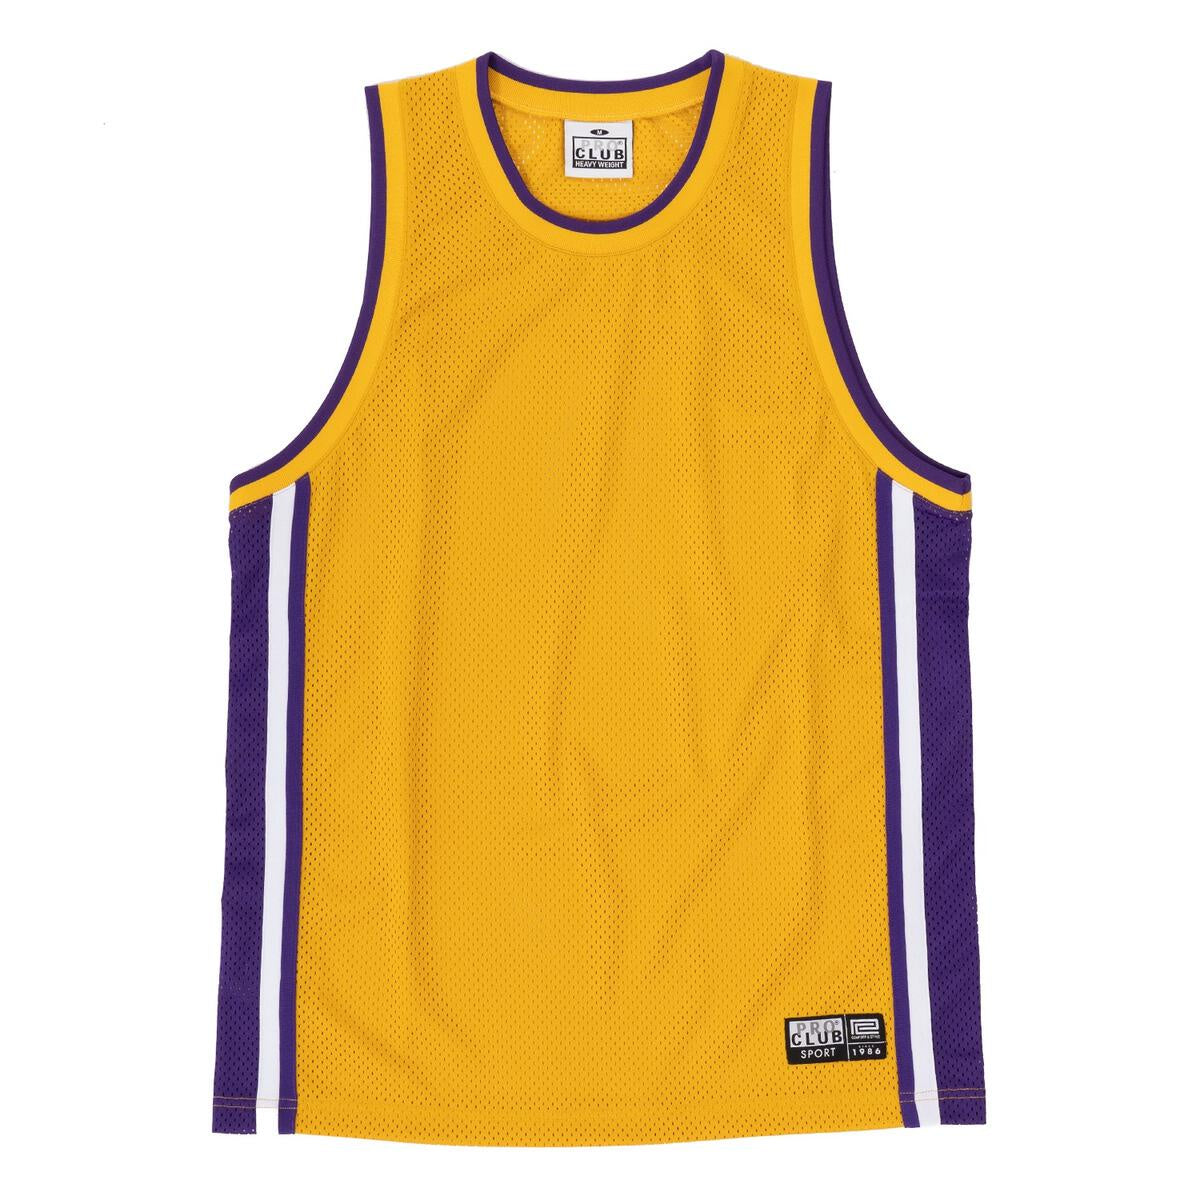 Pro Club Retro Basketball Jersey - Yellow